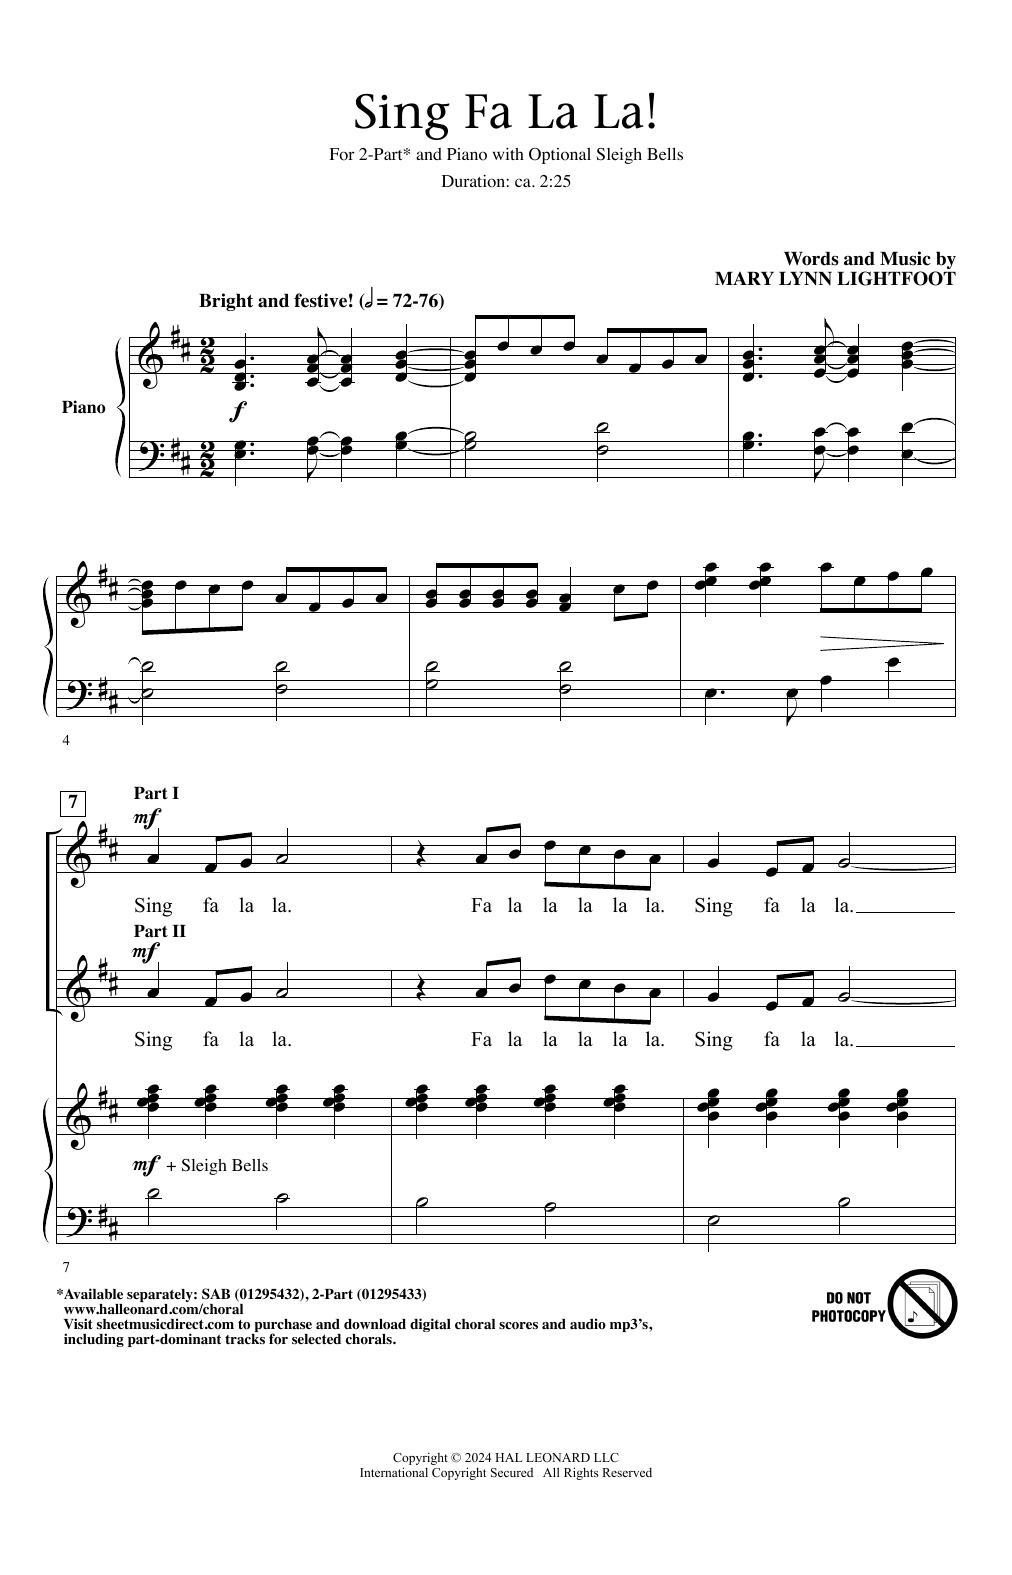 Mary Lynn Lightfoot Sing Fa La La! Sheet Music Notes & Chords for SAB Choir - Download or Print PDF